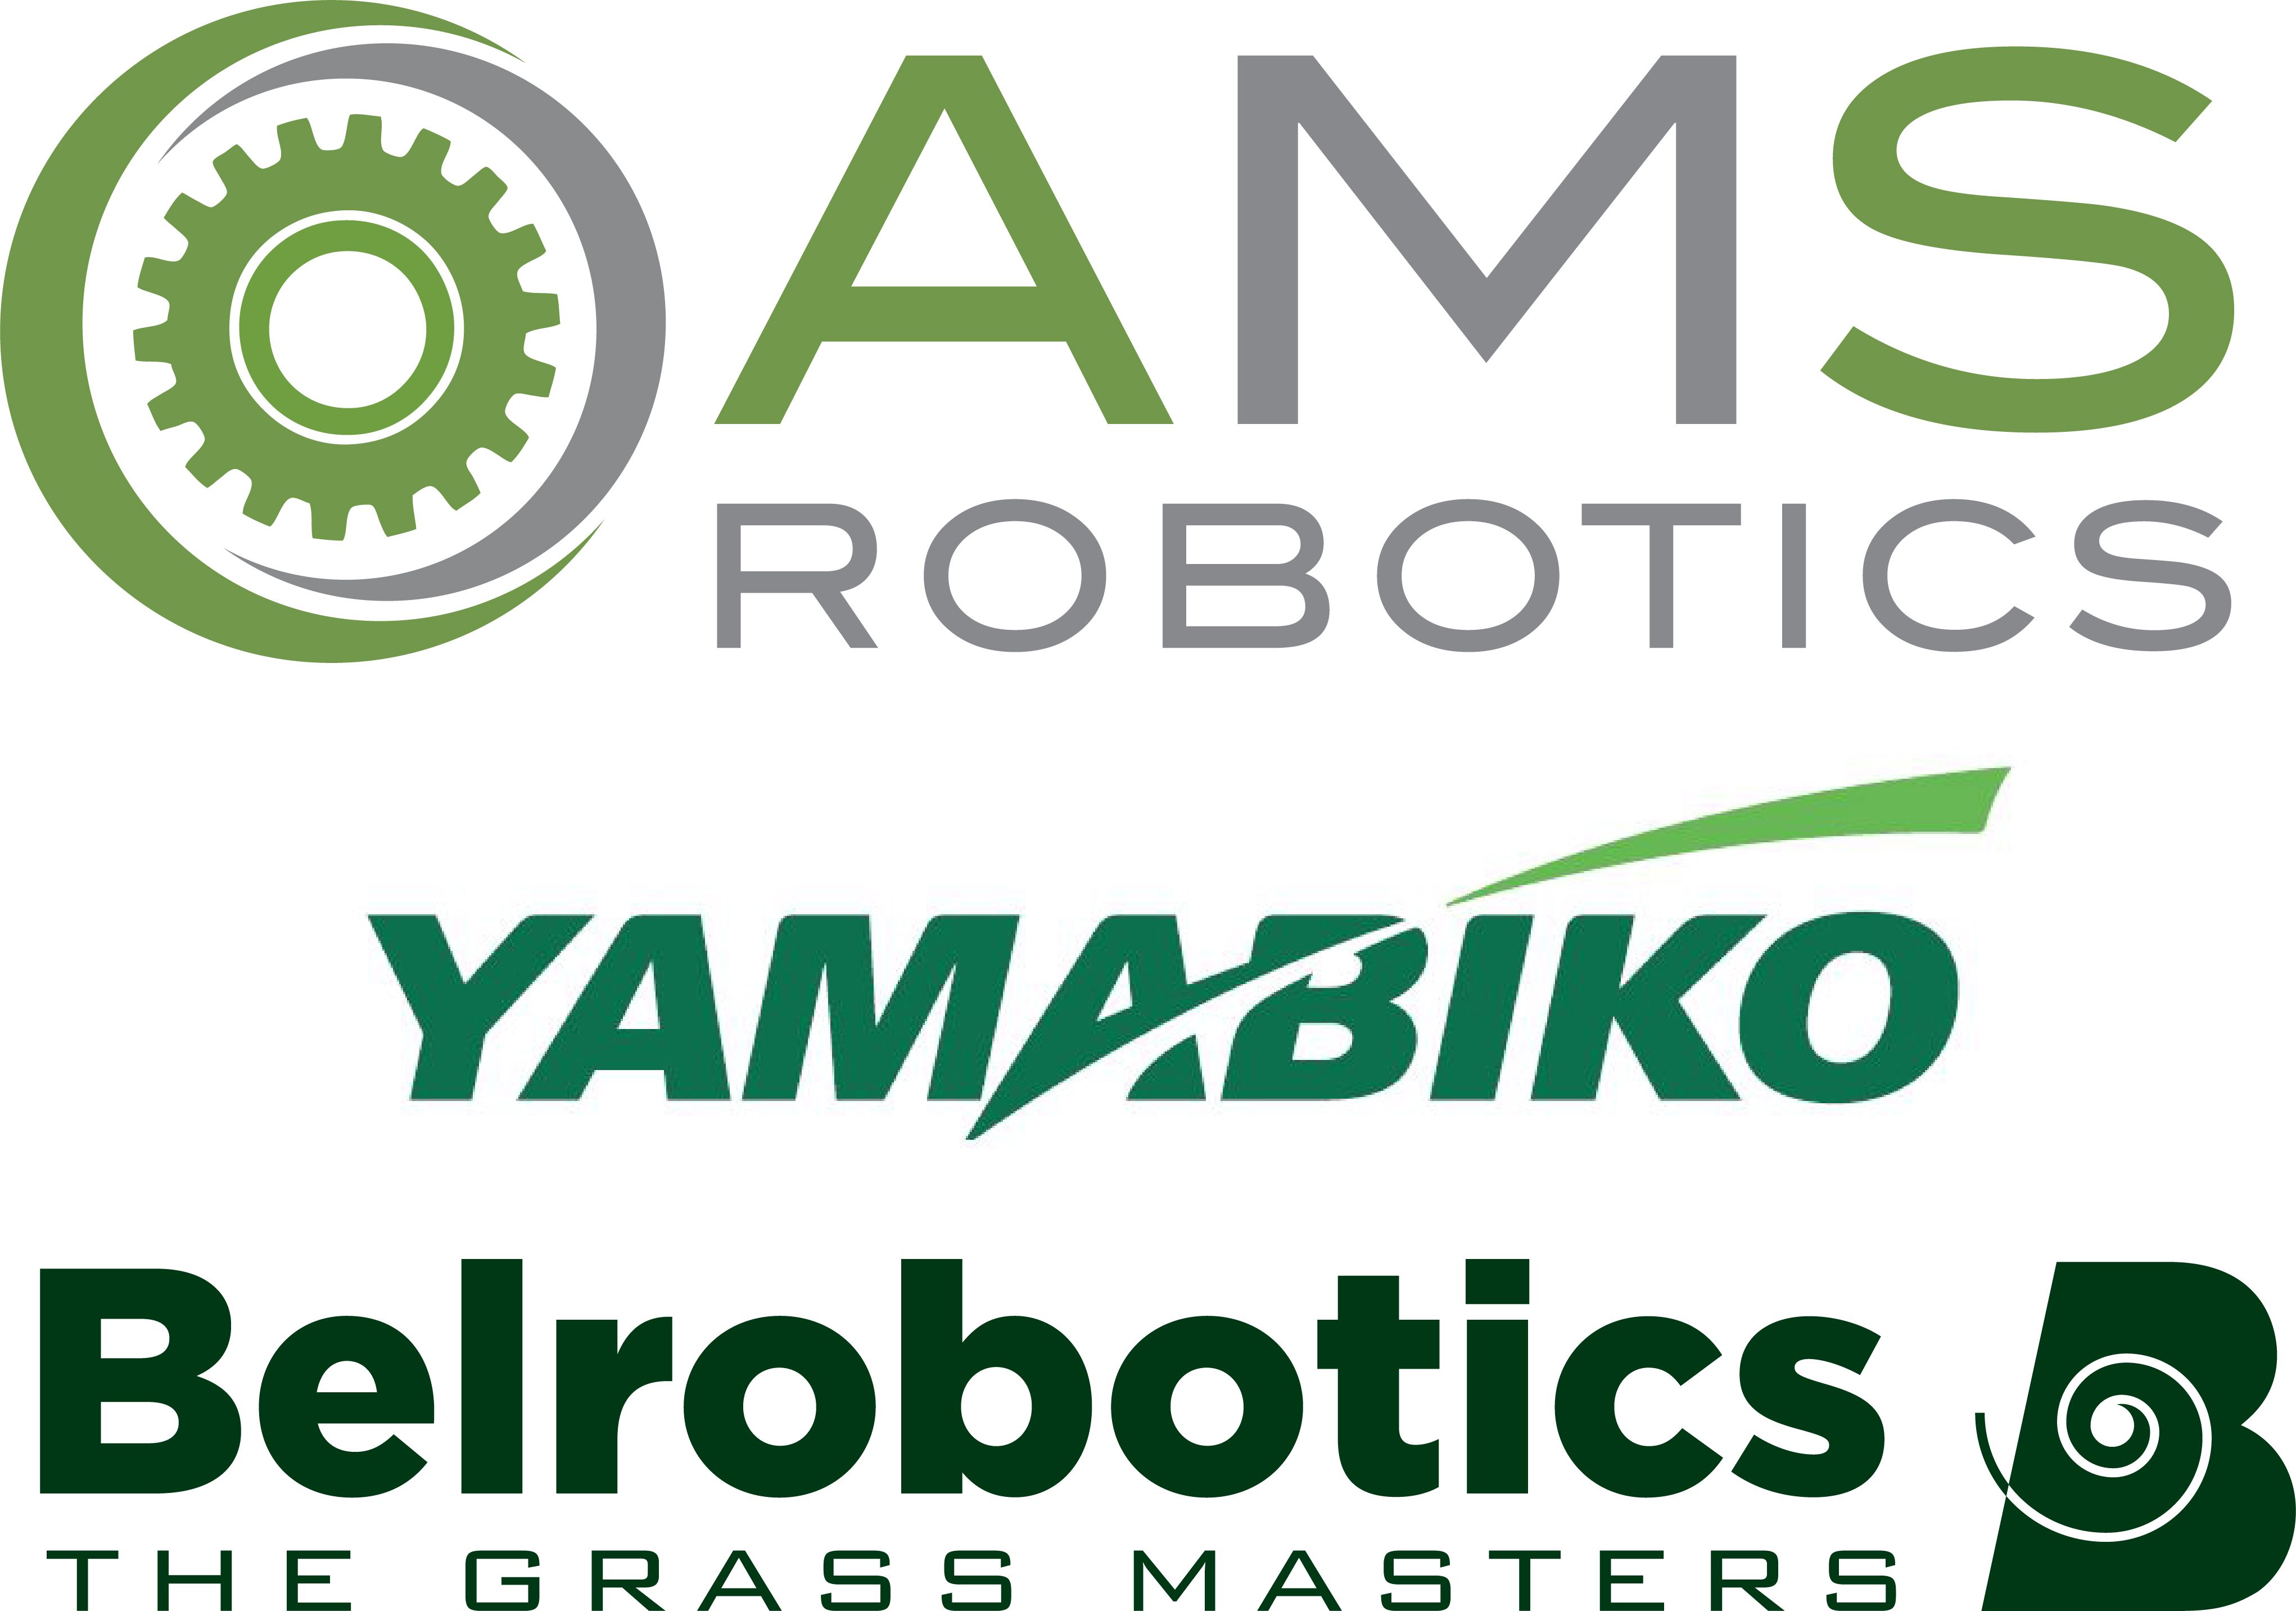 AMS Robotics